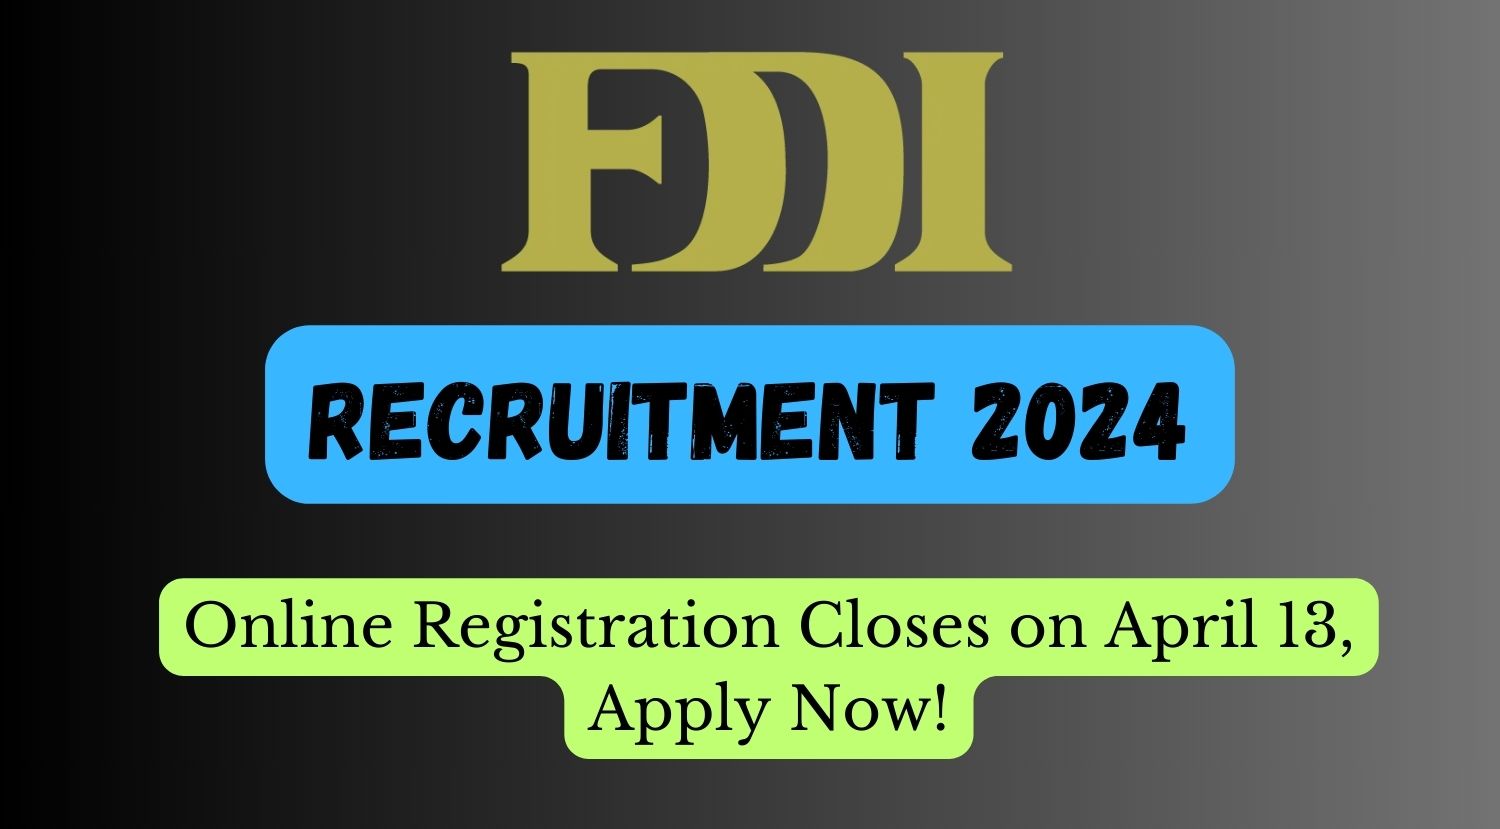 FDDI Recruitment 2024 Online Registration Closes on April 13, Apply Now